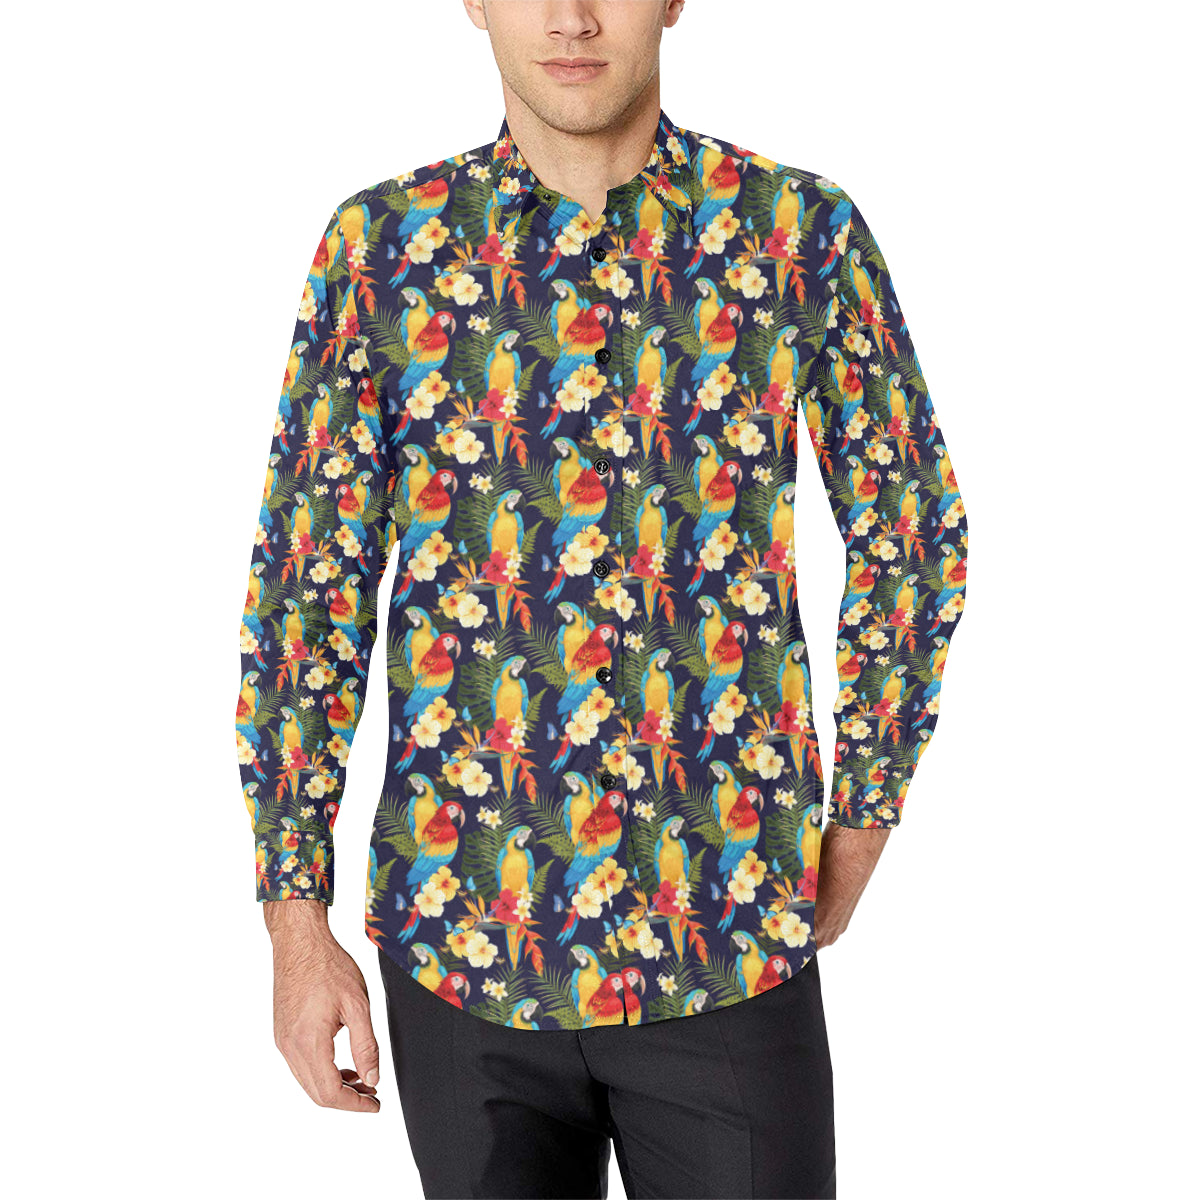 Parrot Themed Design Men's Long Sleeve Shirt